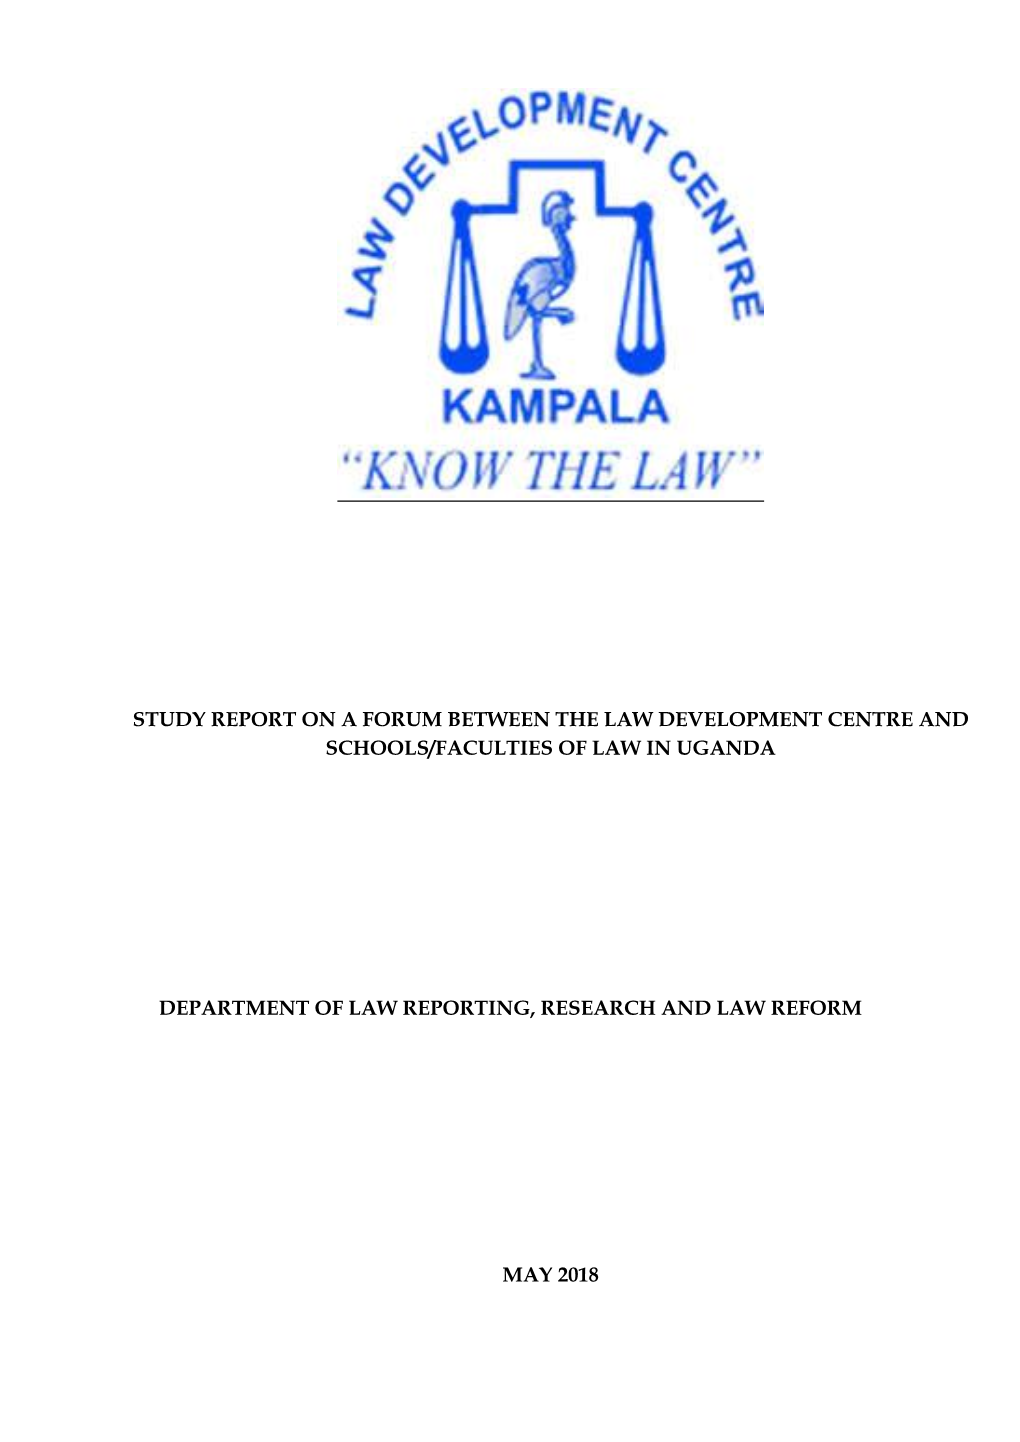 Study Report on a Forum Between LDC & Schools of Law.Pdf